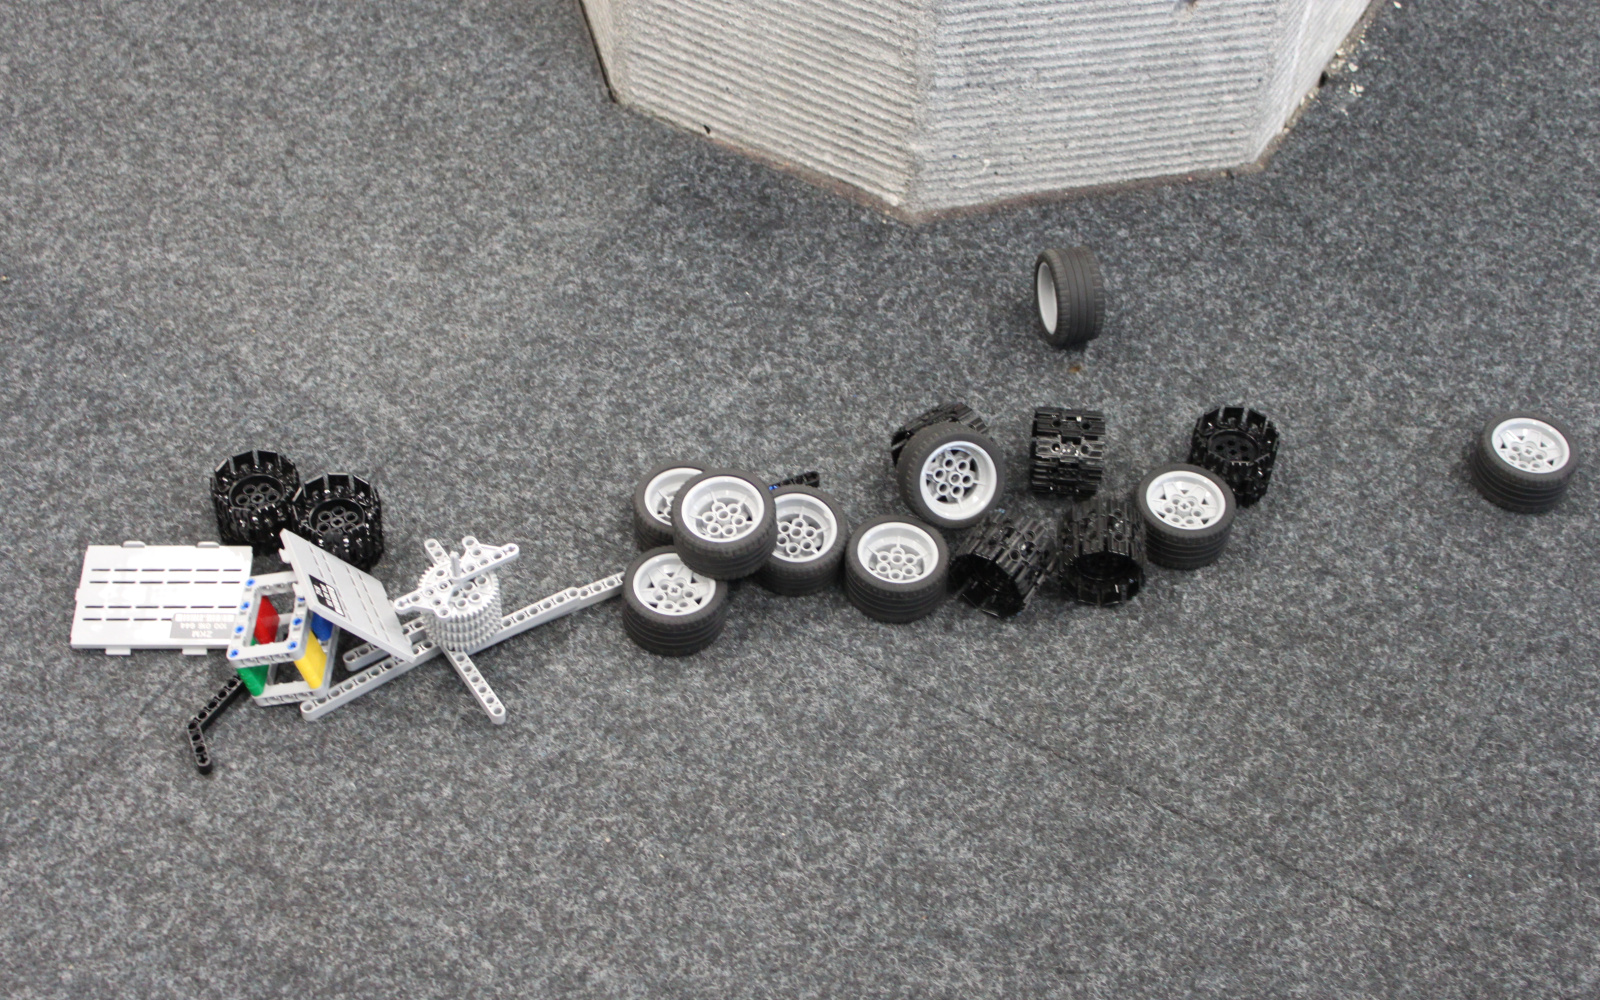 Lego-robotparts spreaded on the floor.